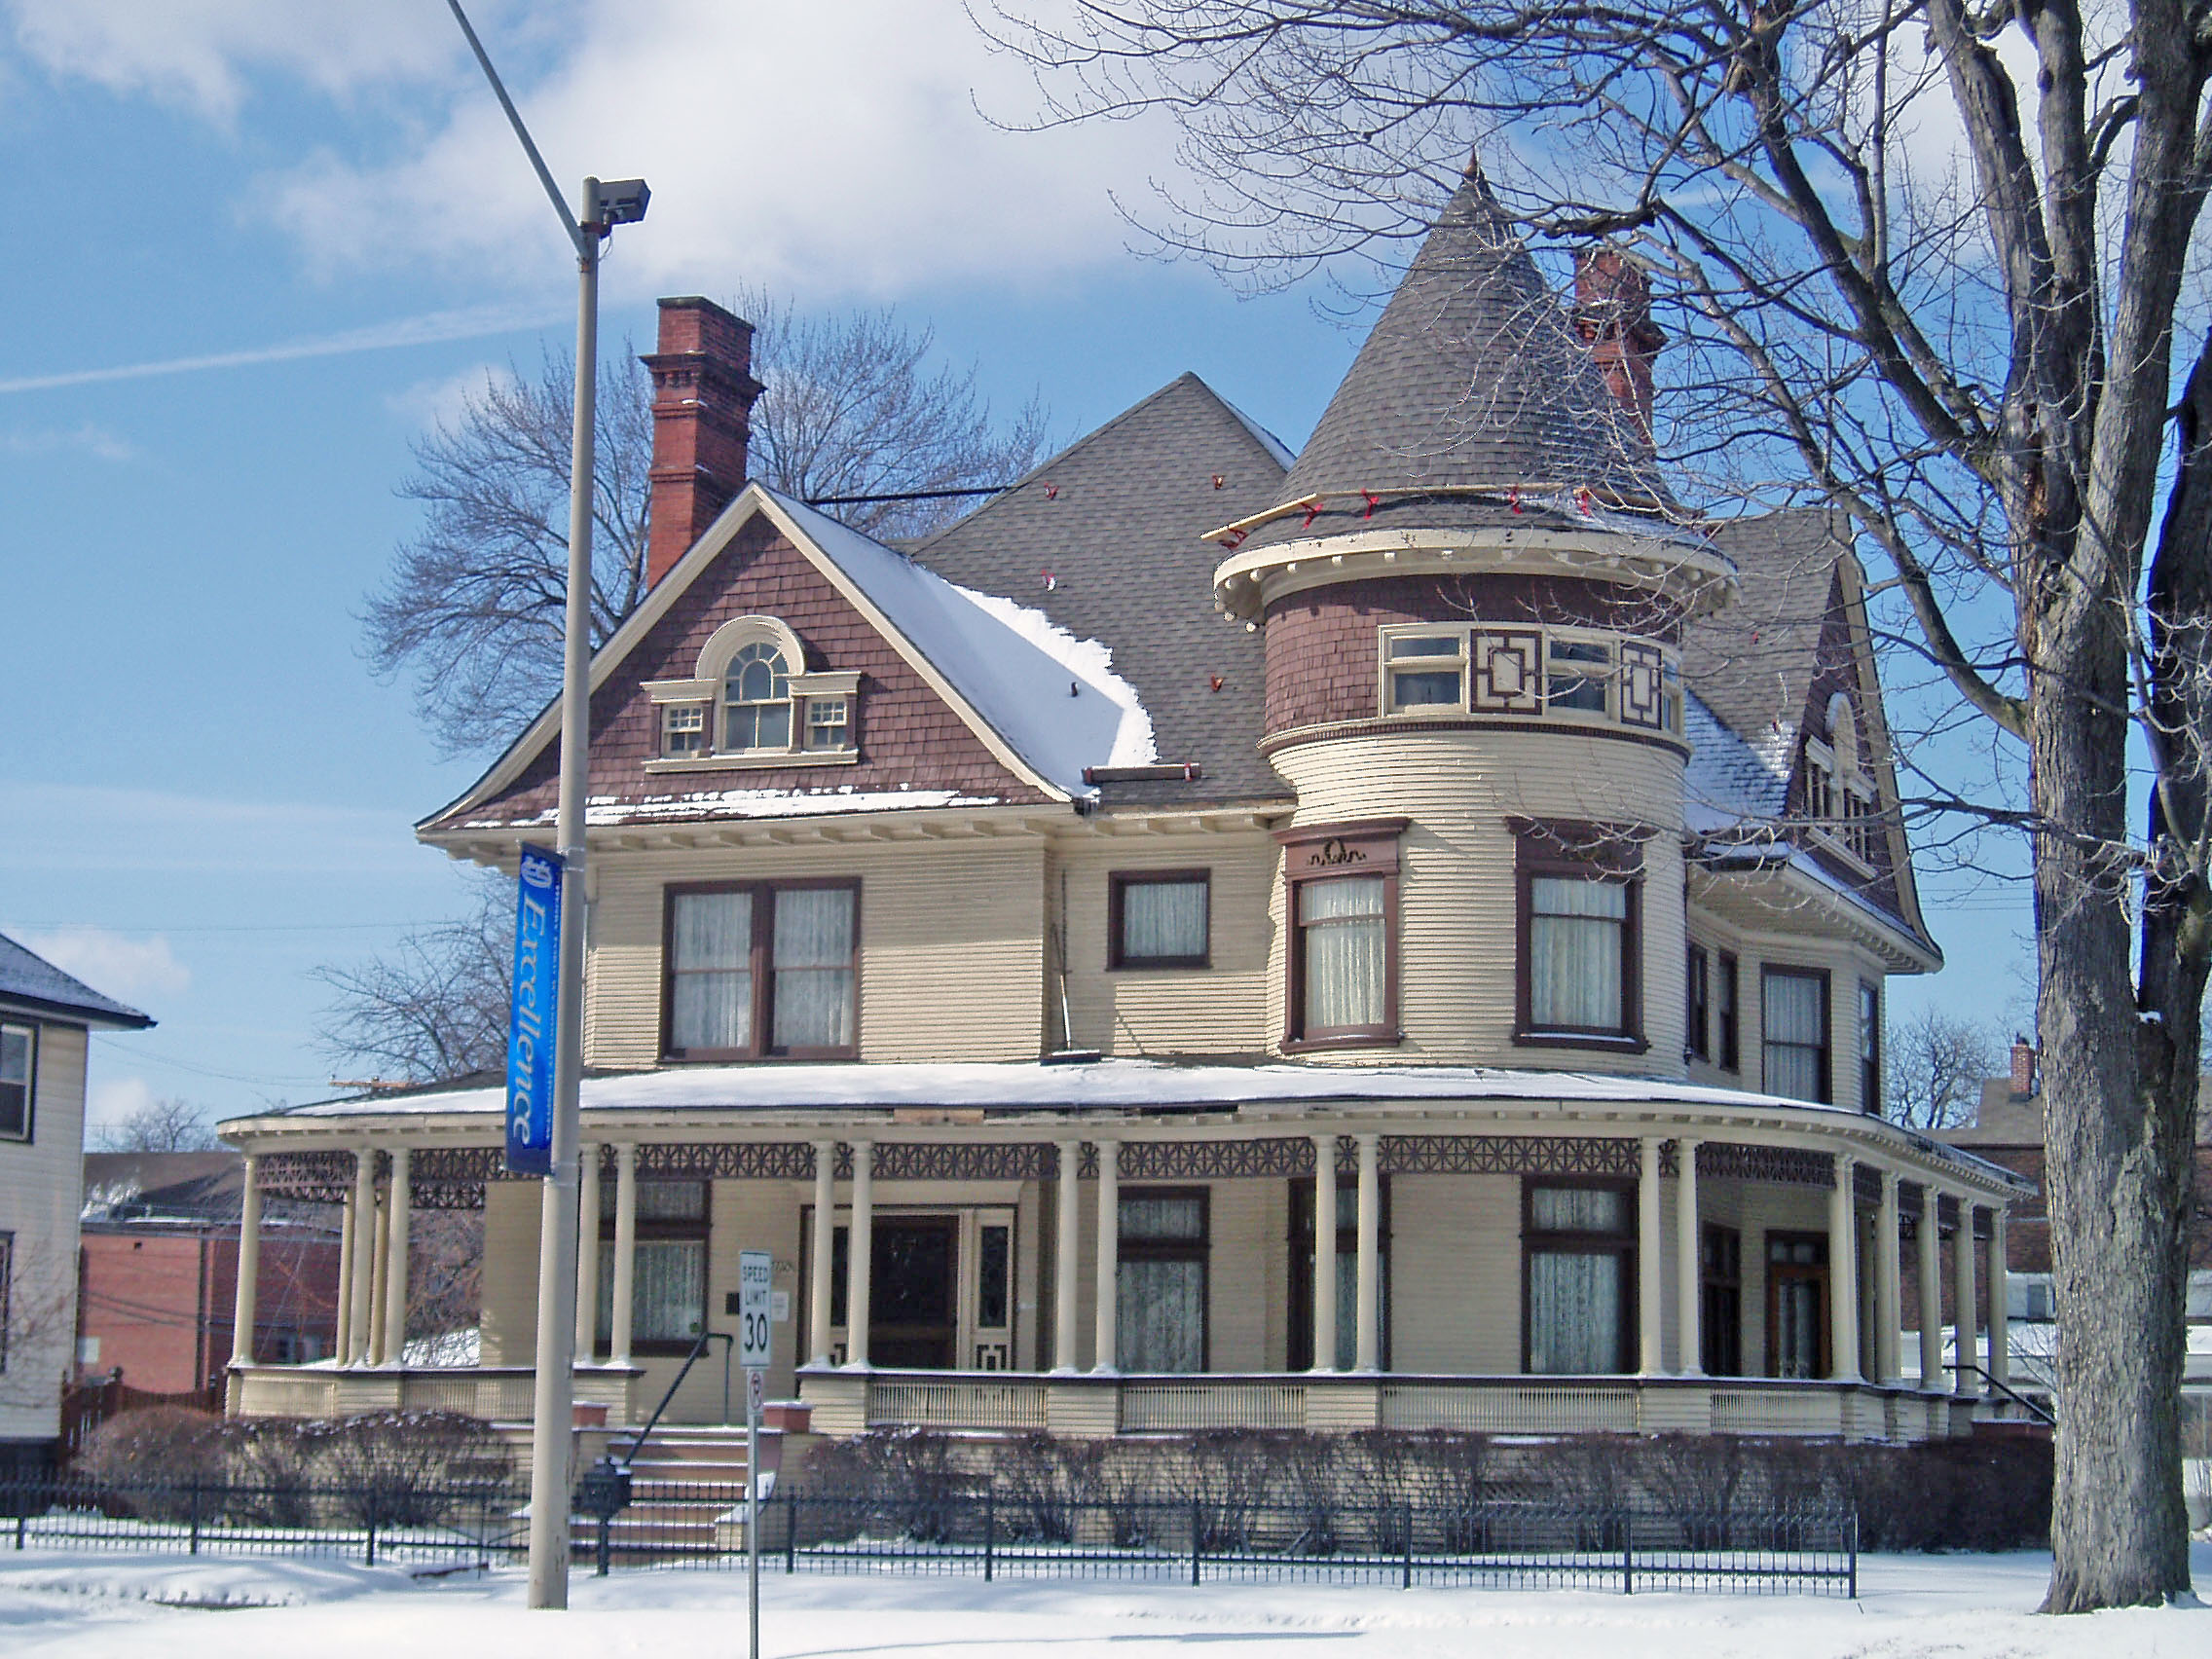 The George P. MacNichol House, Wyandotte, Michigan - Homes, History and